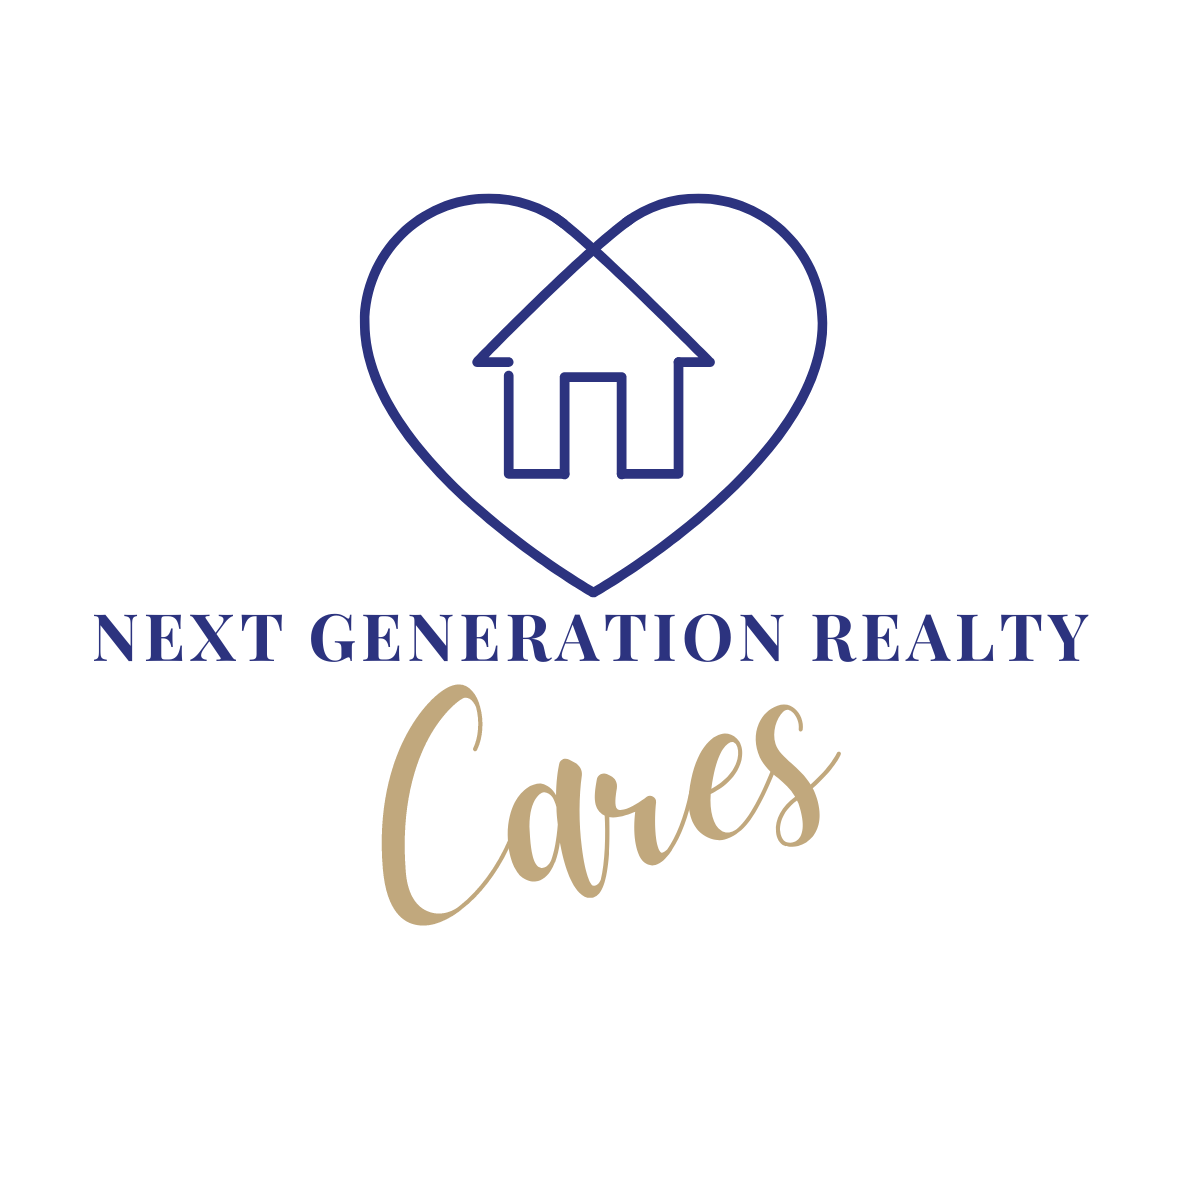 Next Generation Cares logo